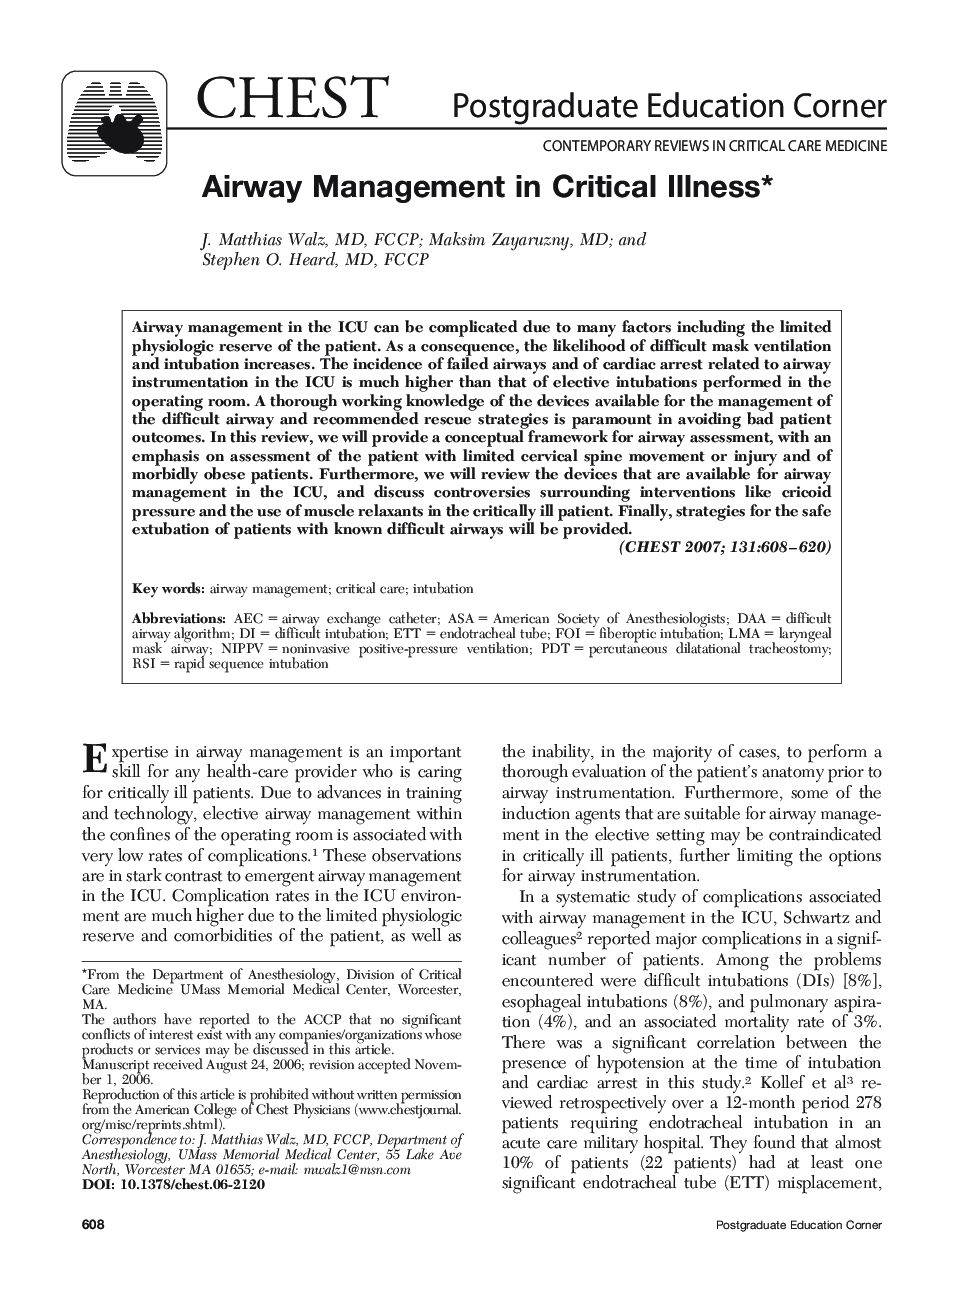 Airway Management in Critical Illness 